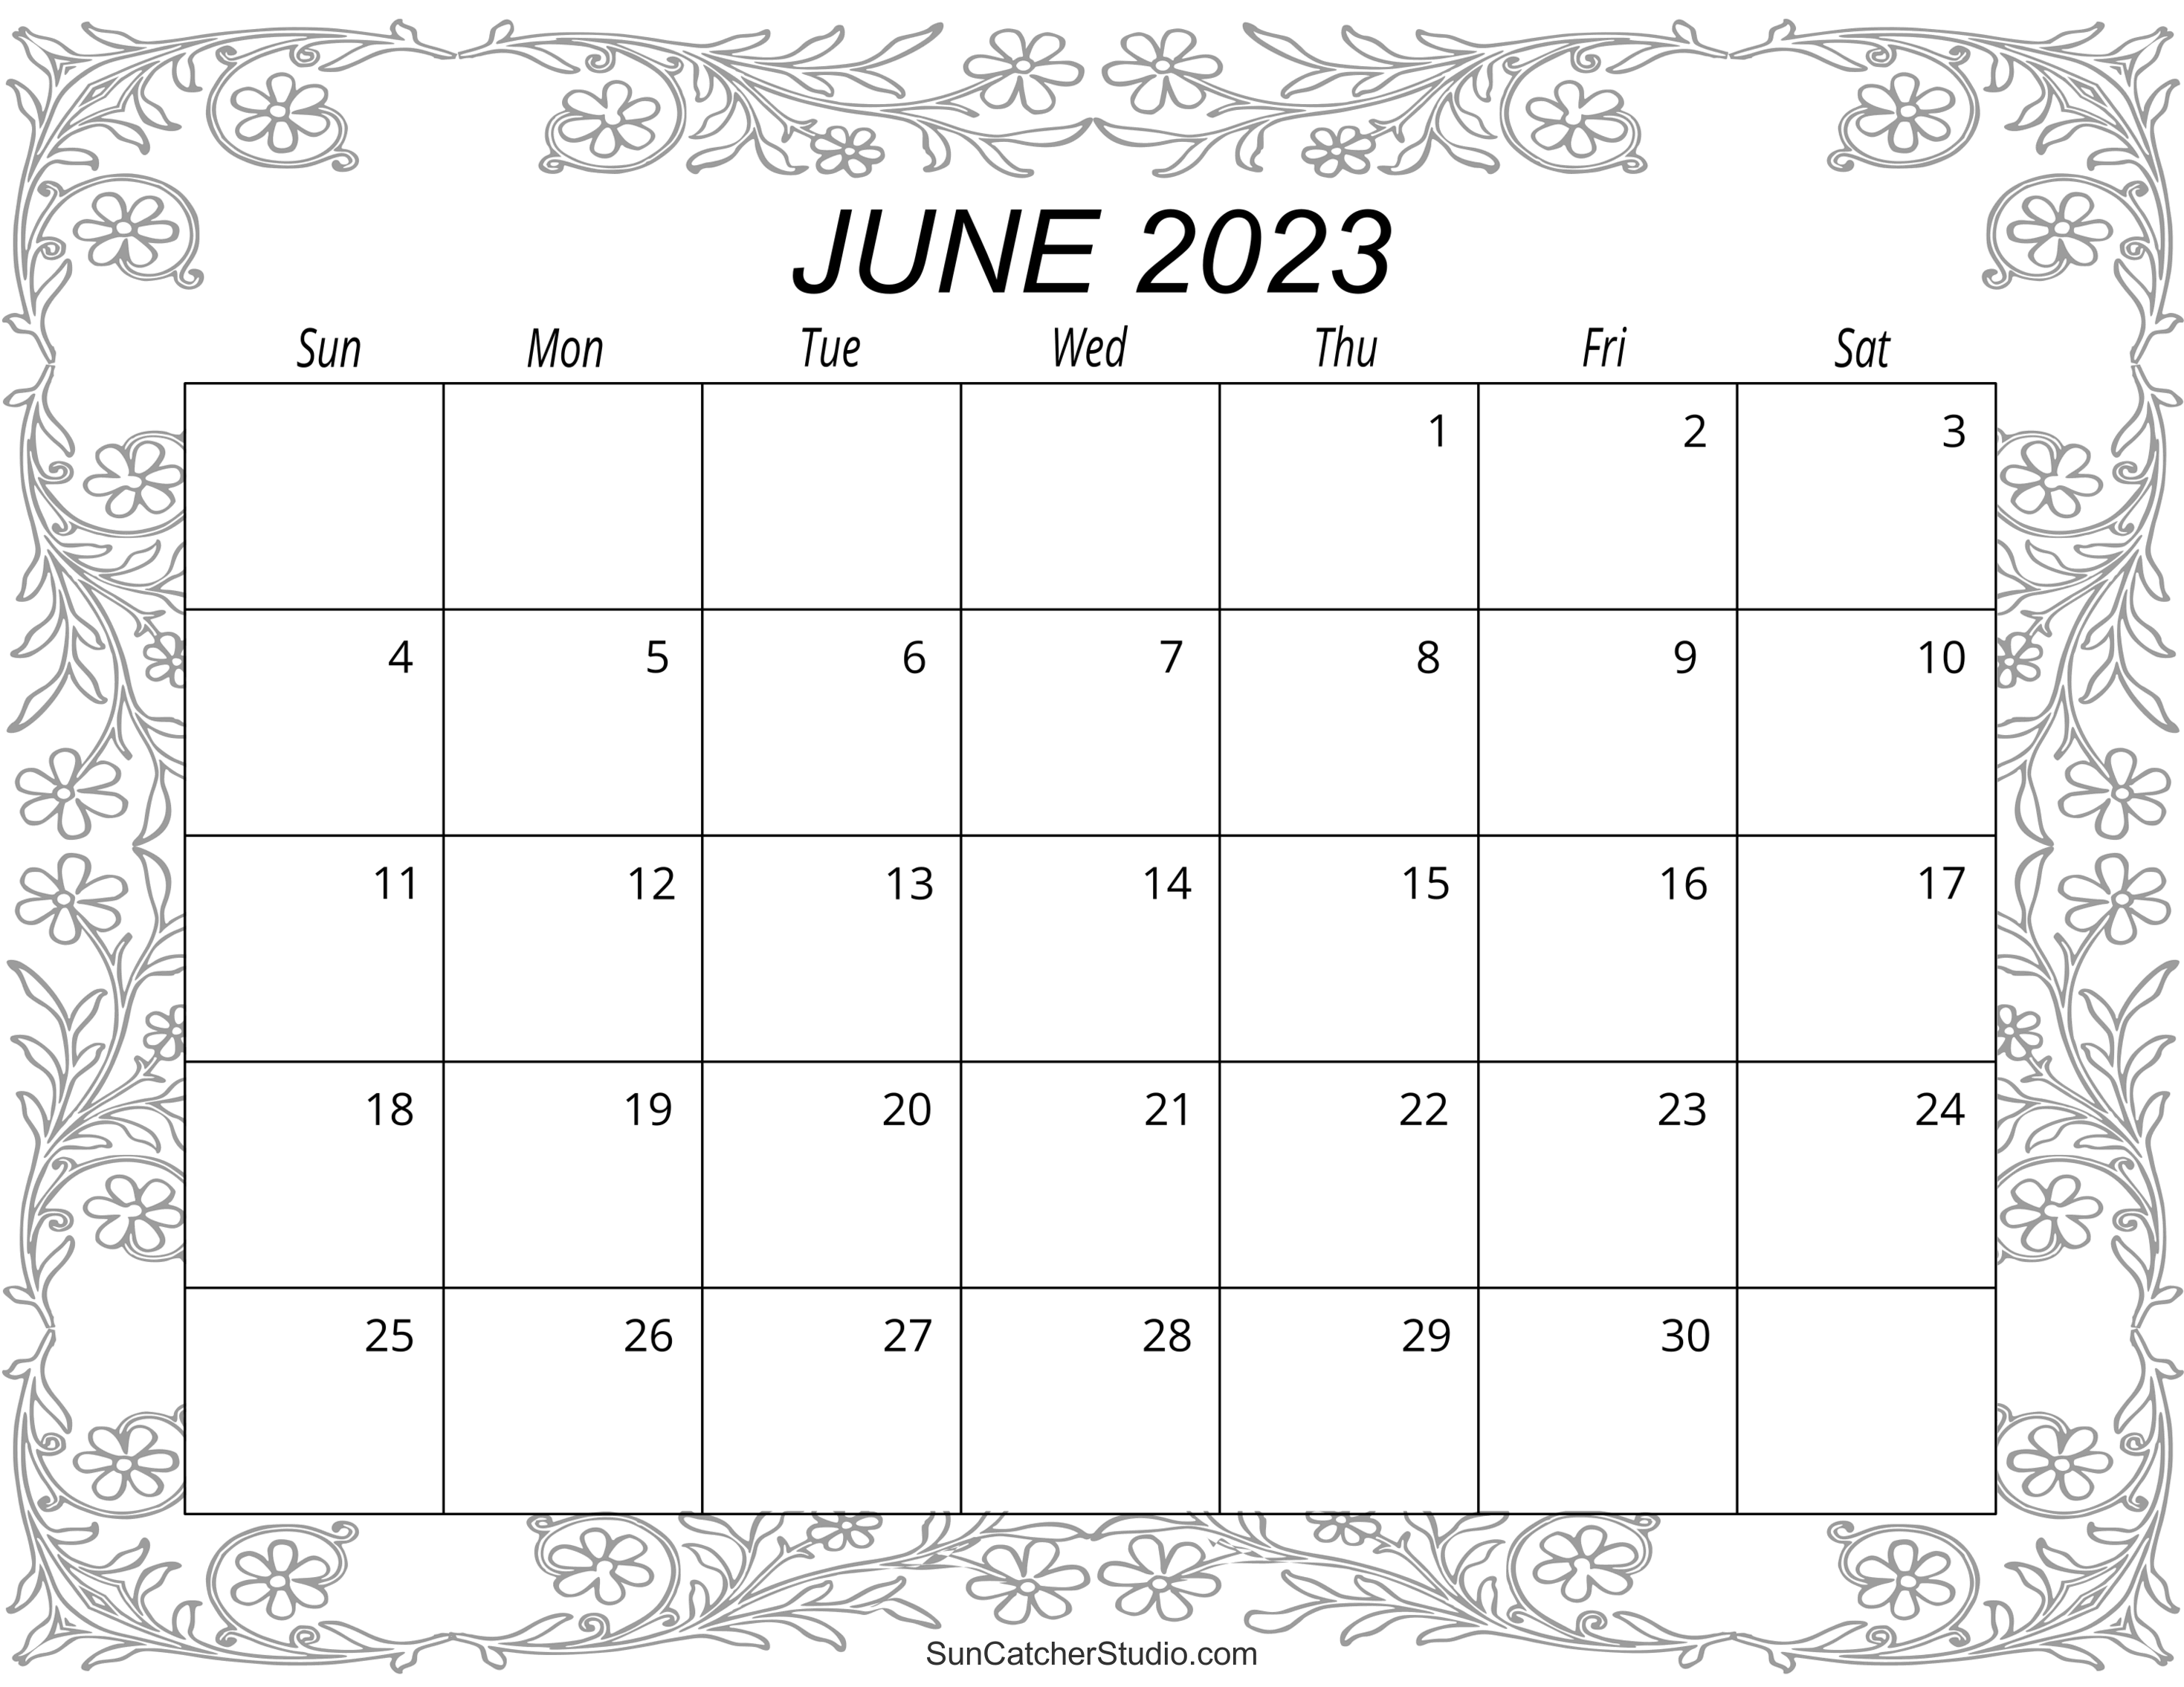 June calendar free printable â diy projects patterns monograms designs templates